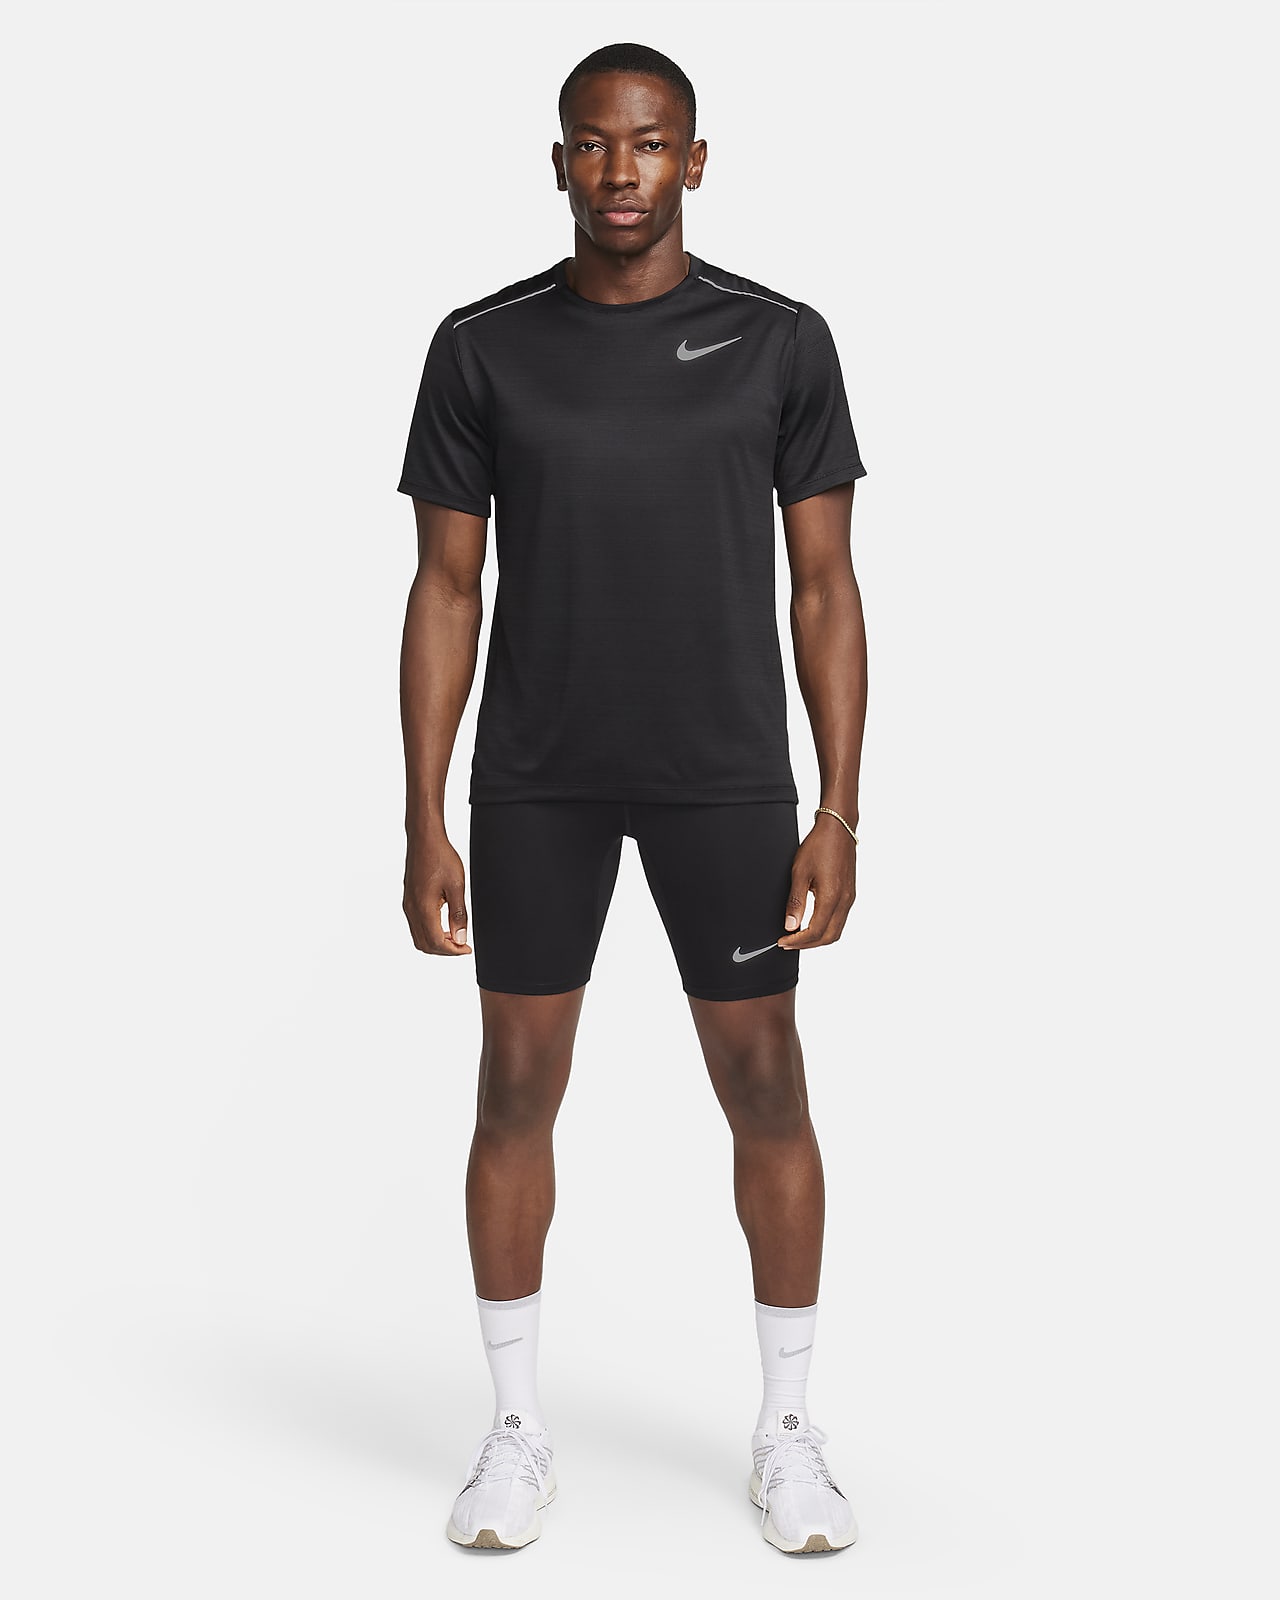 Nike Fast Runway Full Length Tights Leggings Black Gray size XS NWT  DM1555-010